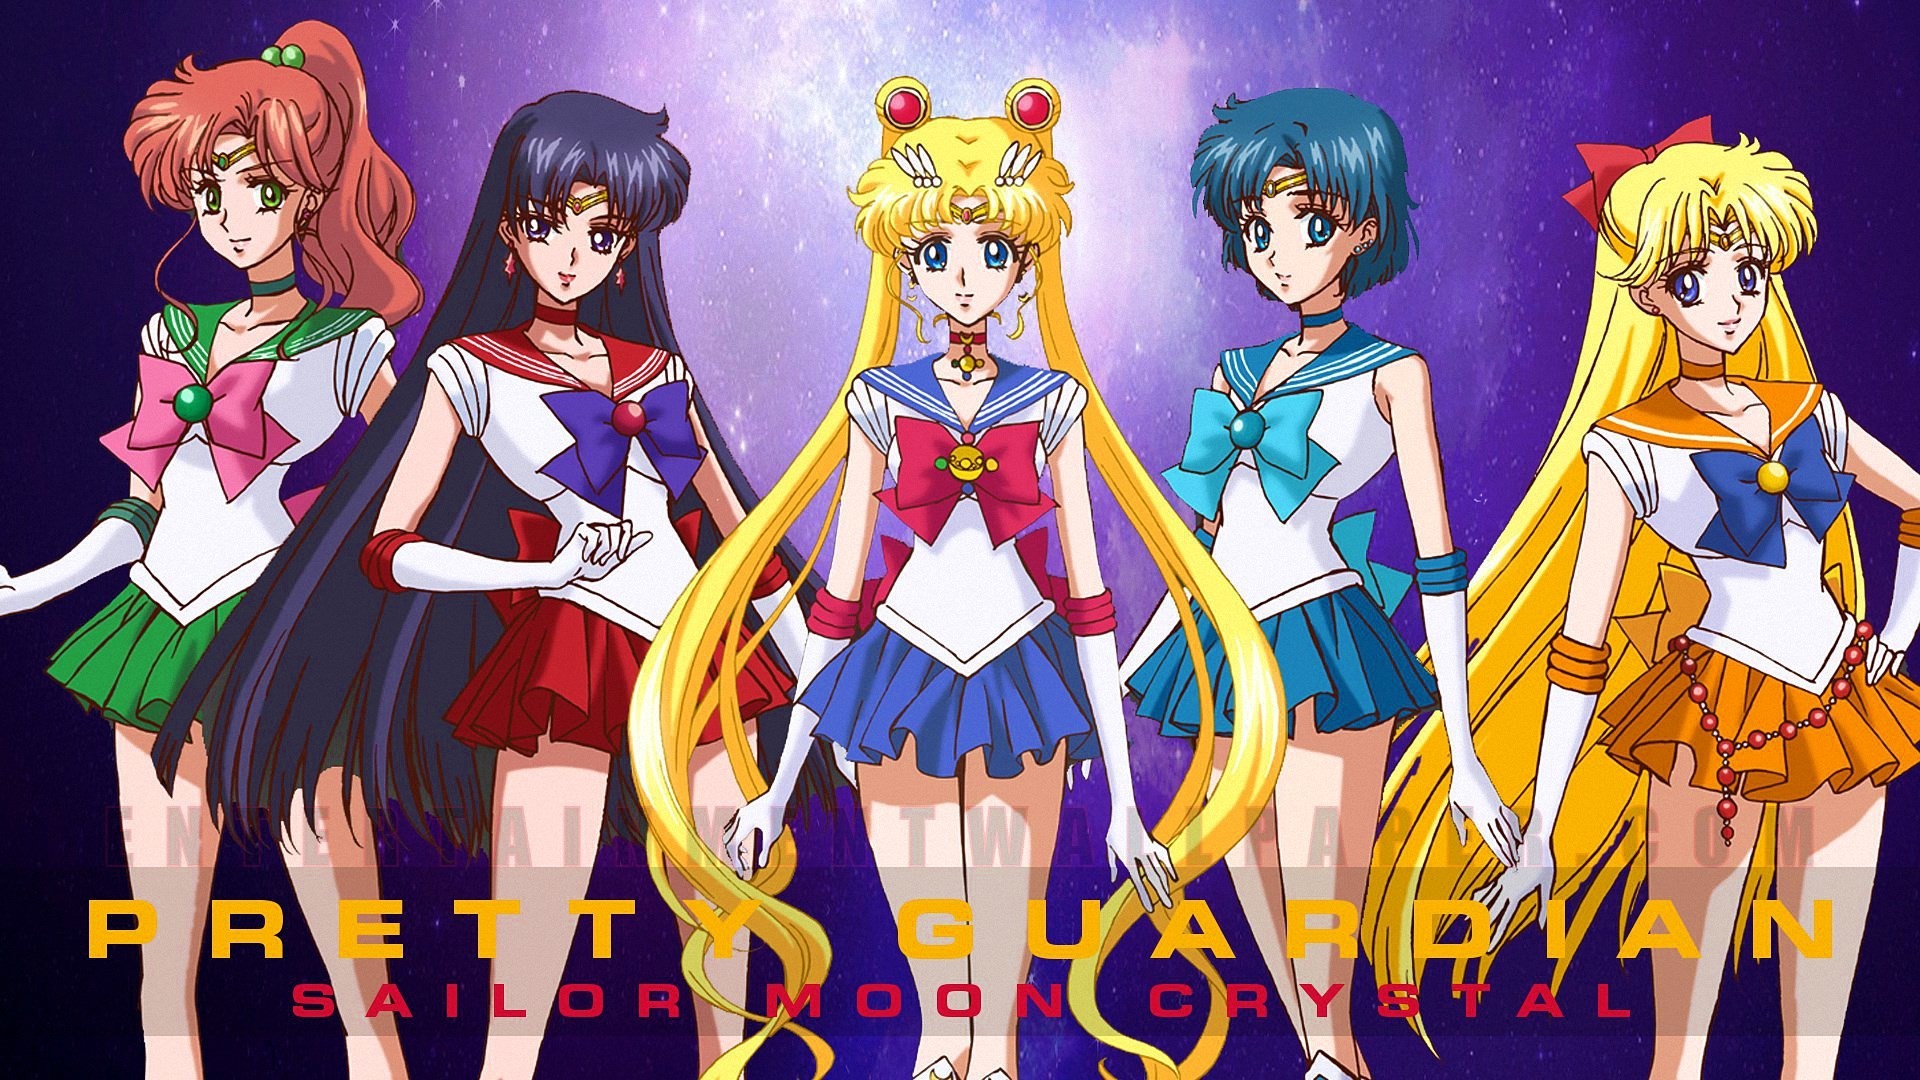 Sailor moon wallpaper backgrounds hd, 569 kB